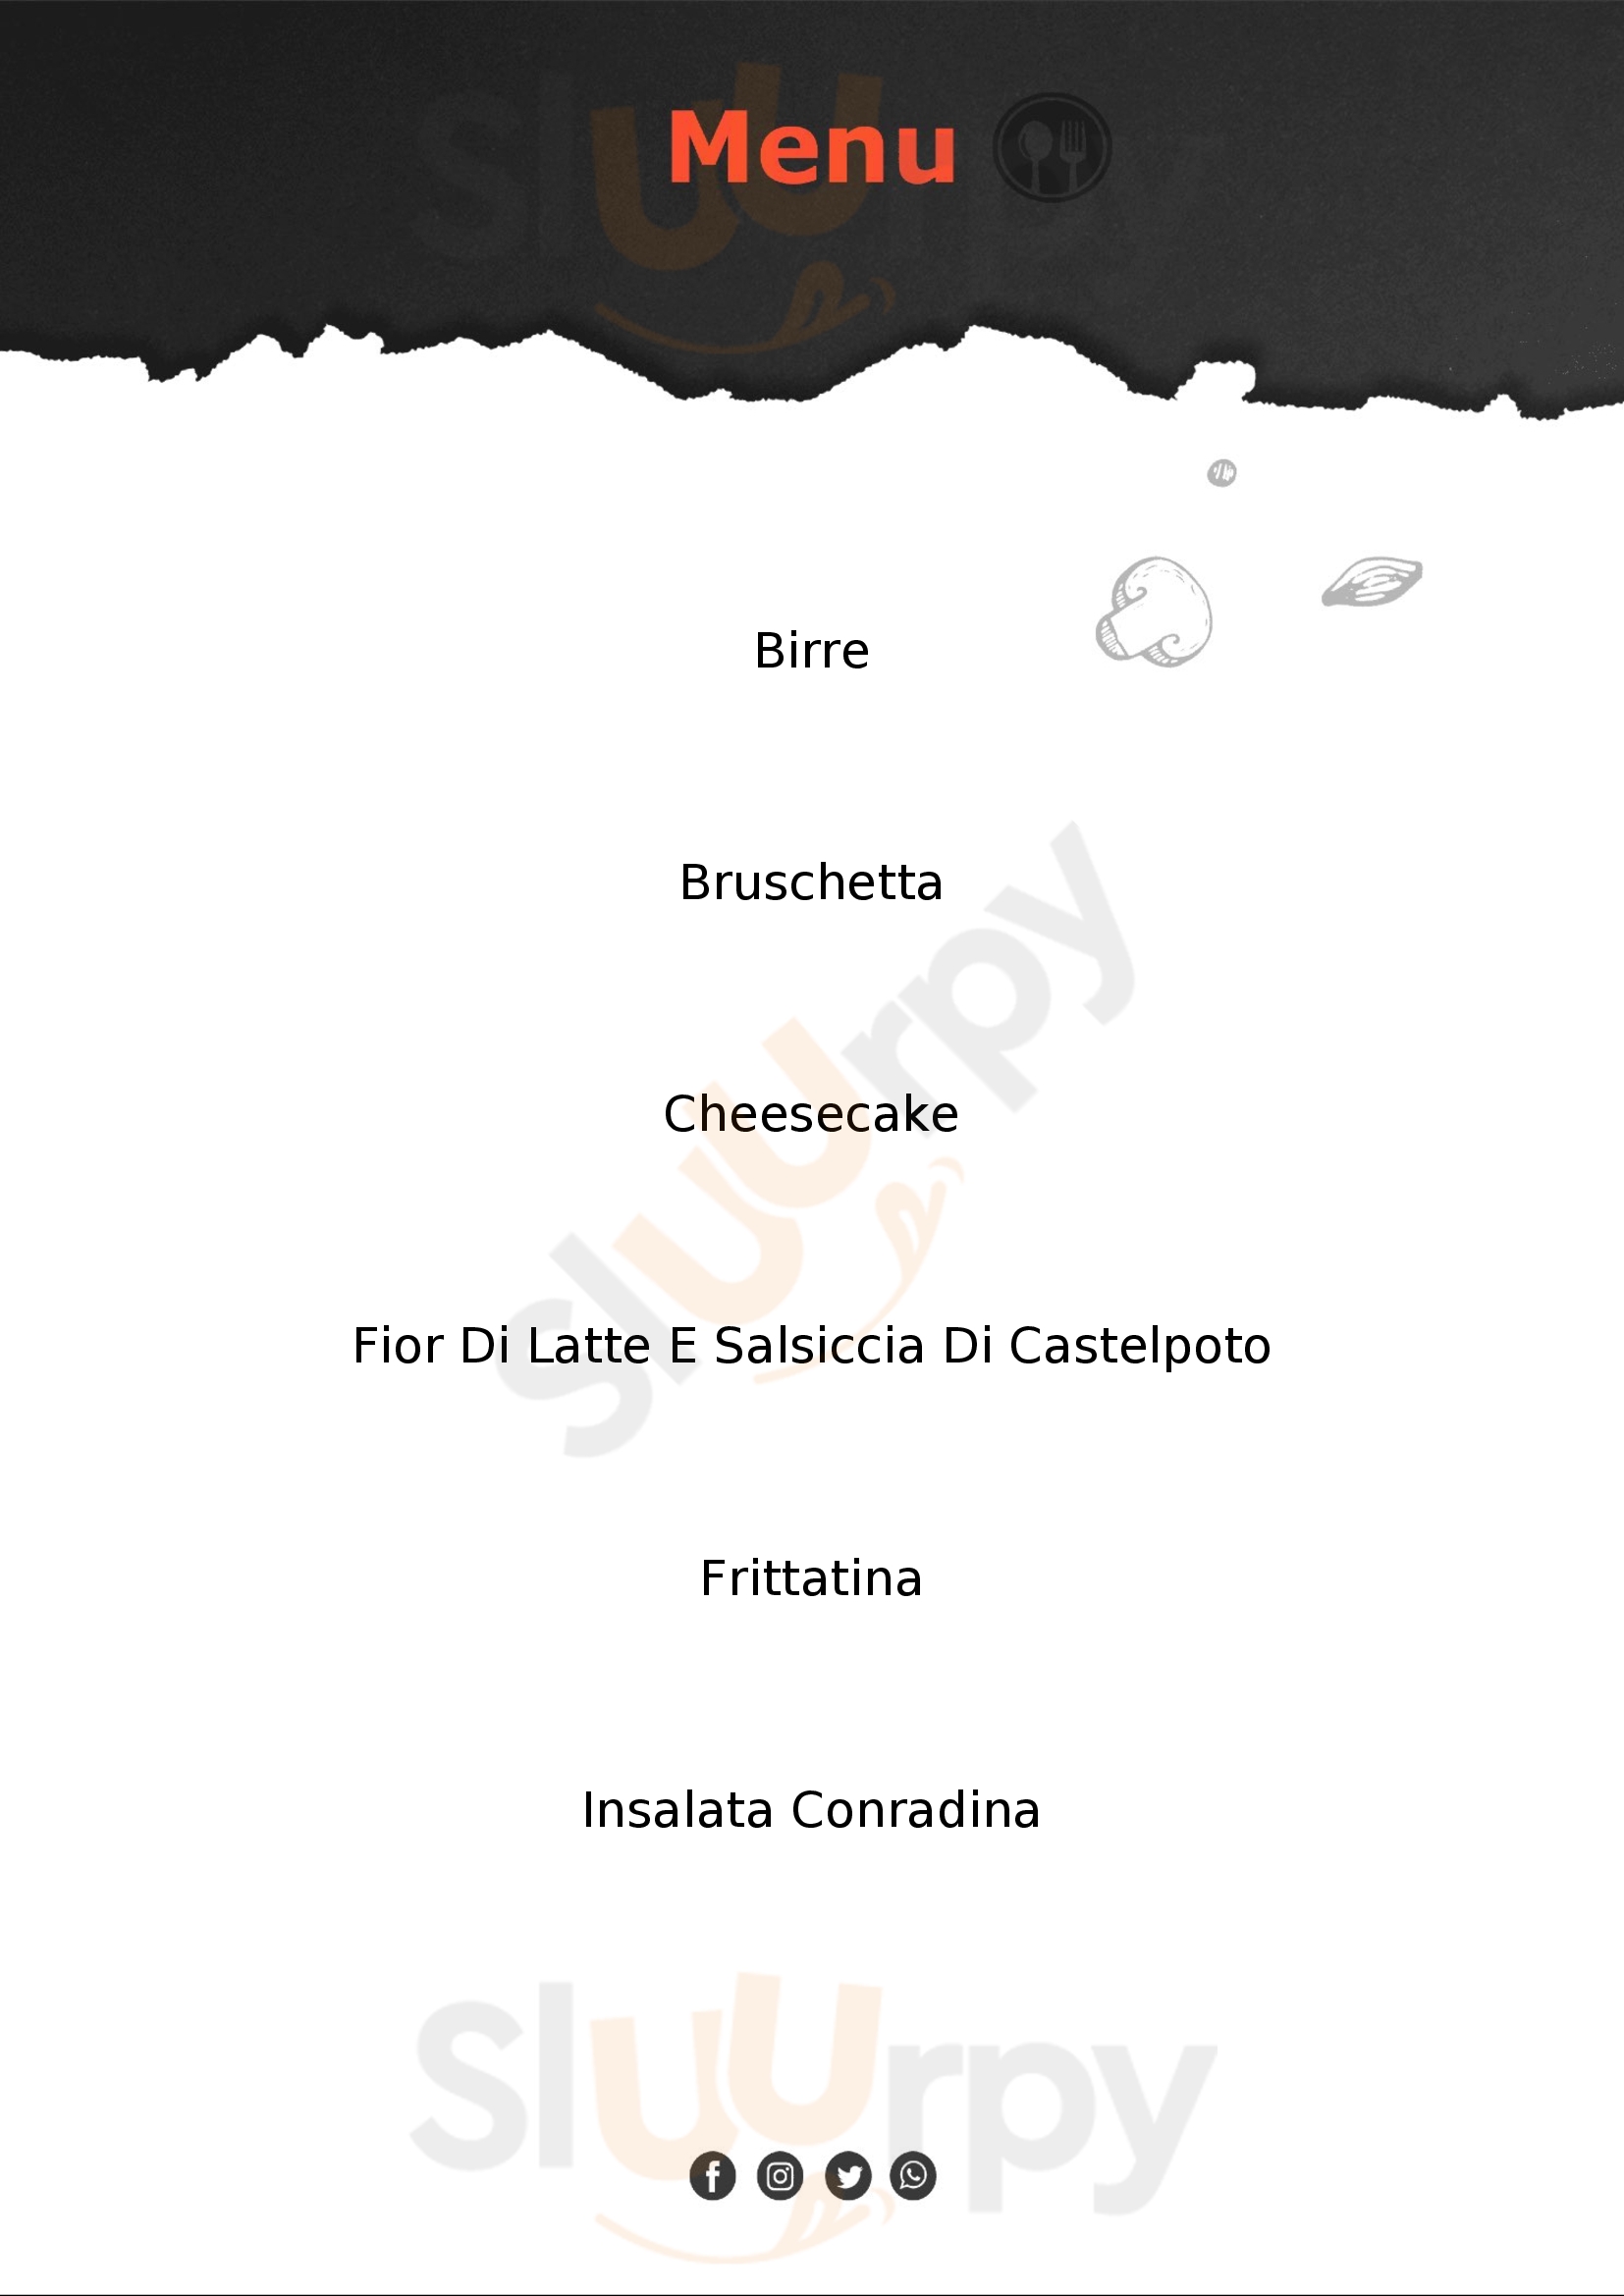 Basilico pizzeria napoletana Montesarchio menù 1 pagina